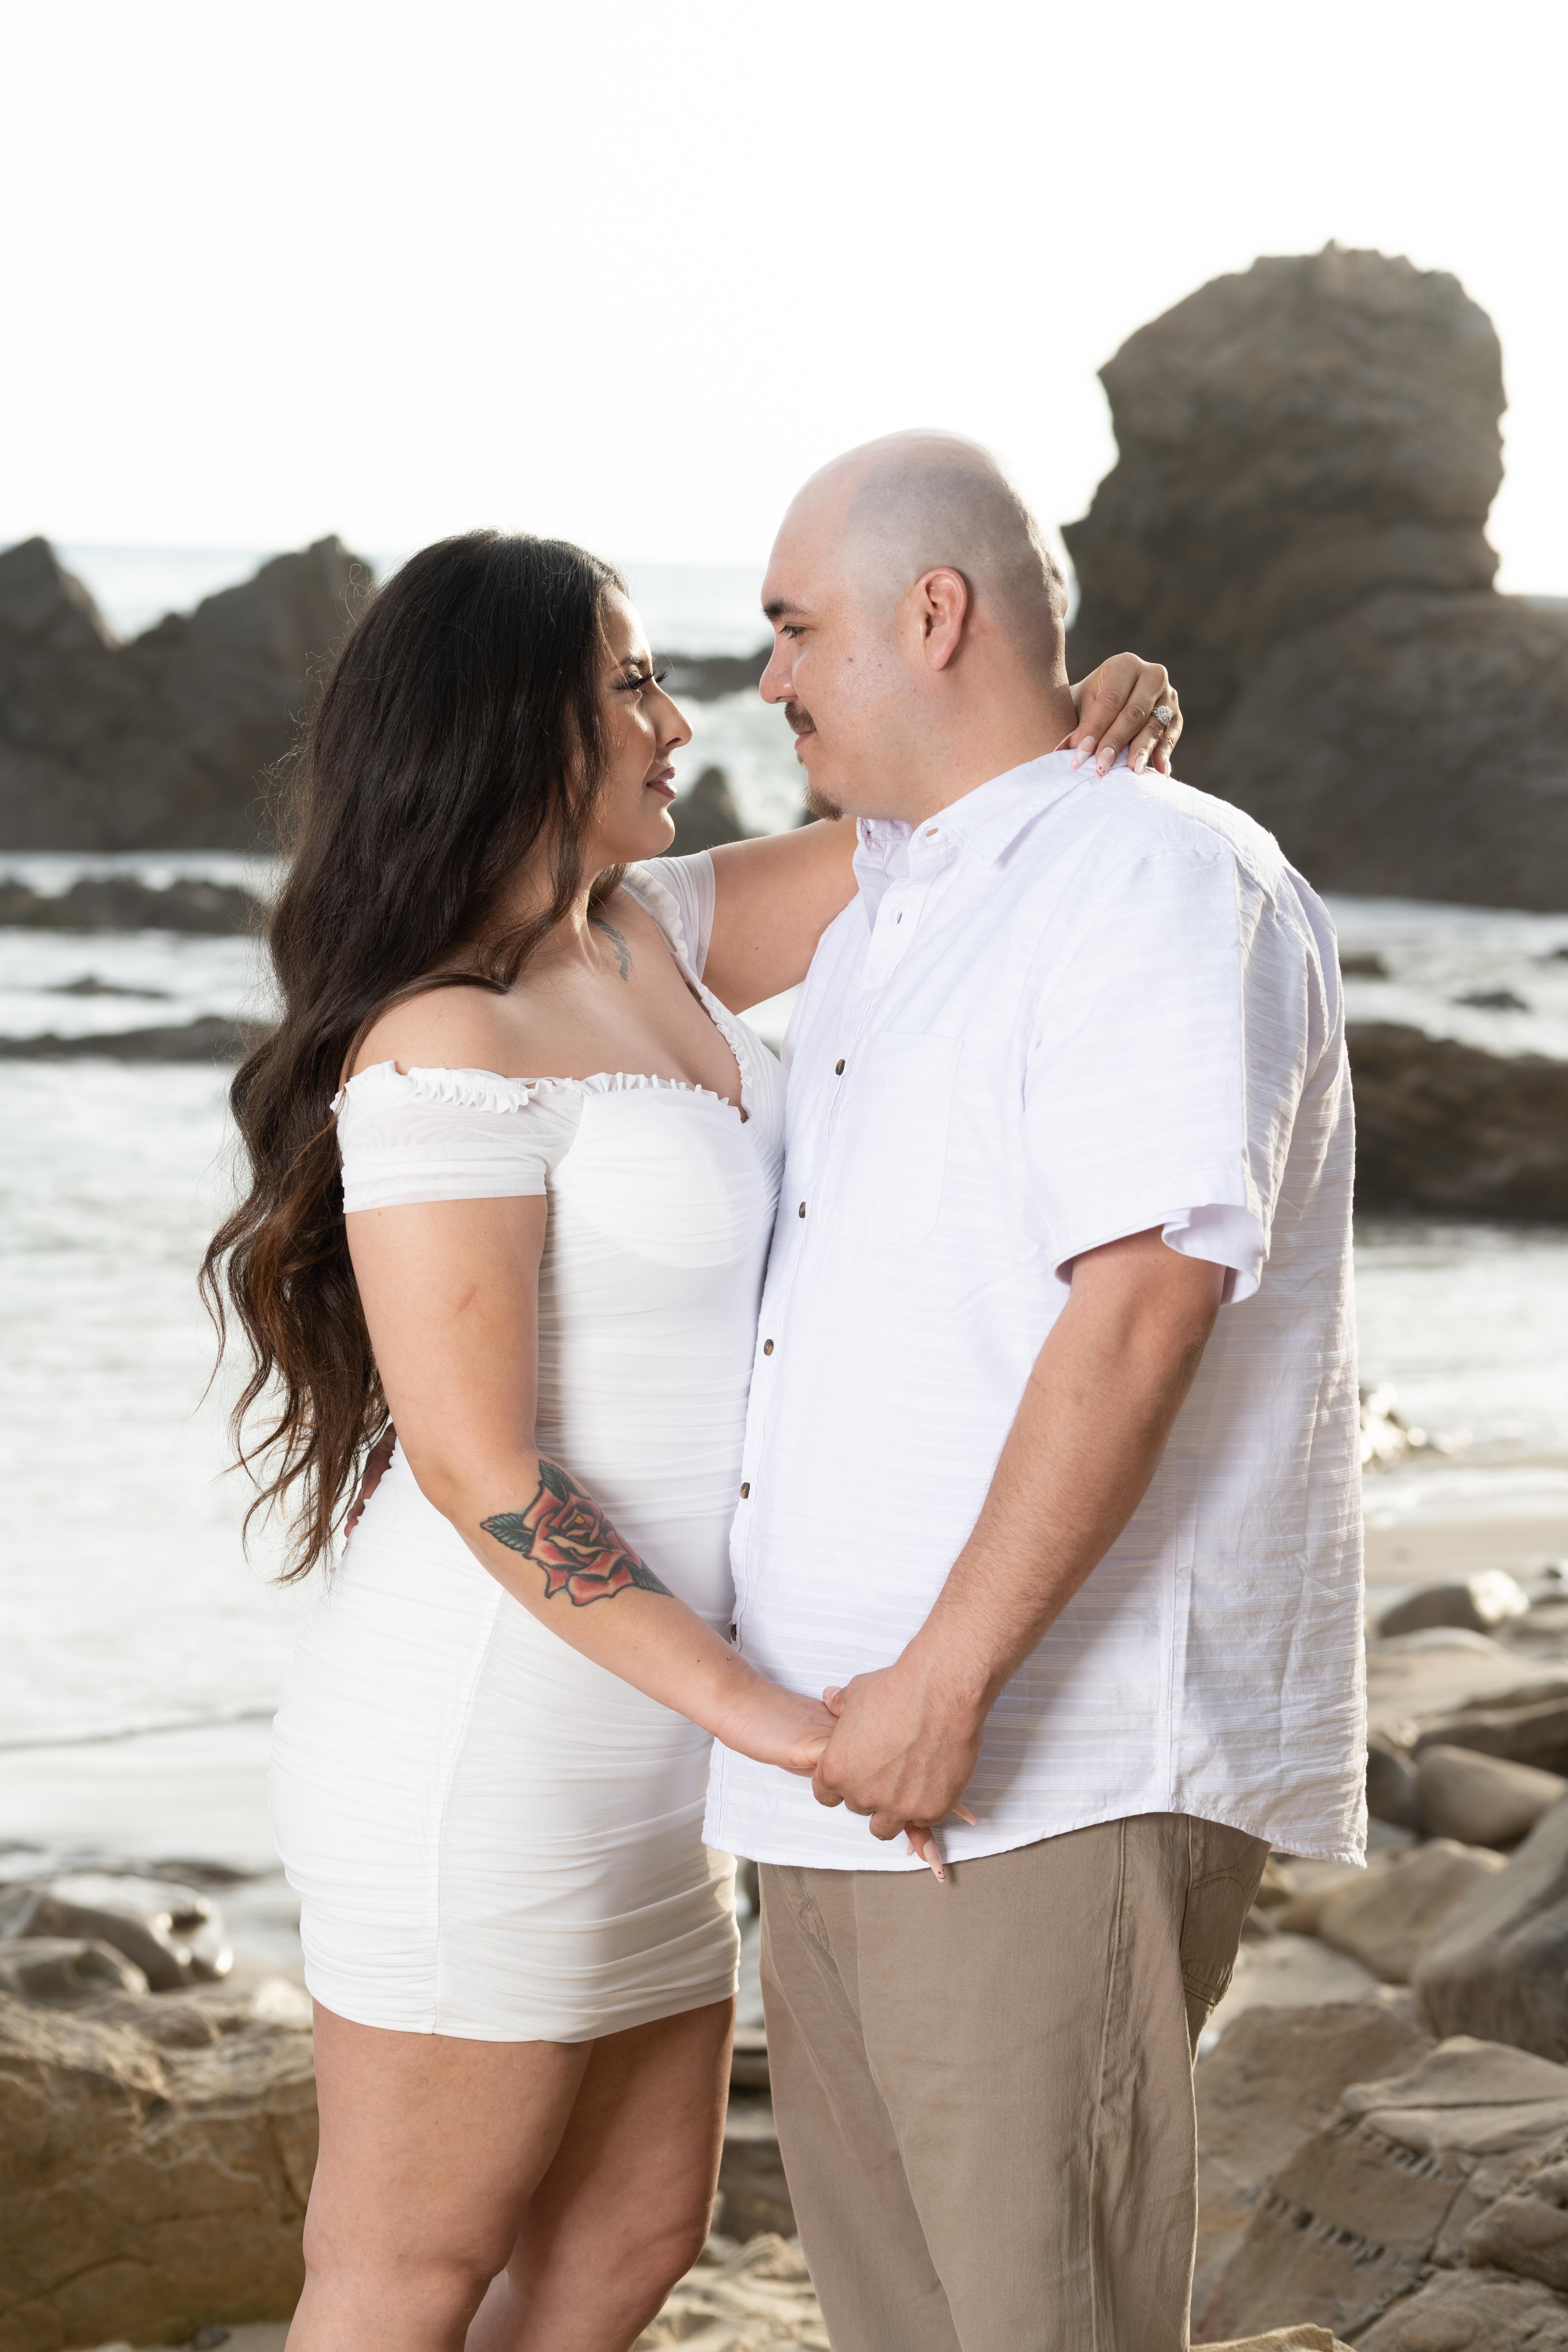 The Wedding Website of Alexandria Godinez and Anthony Hernandez